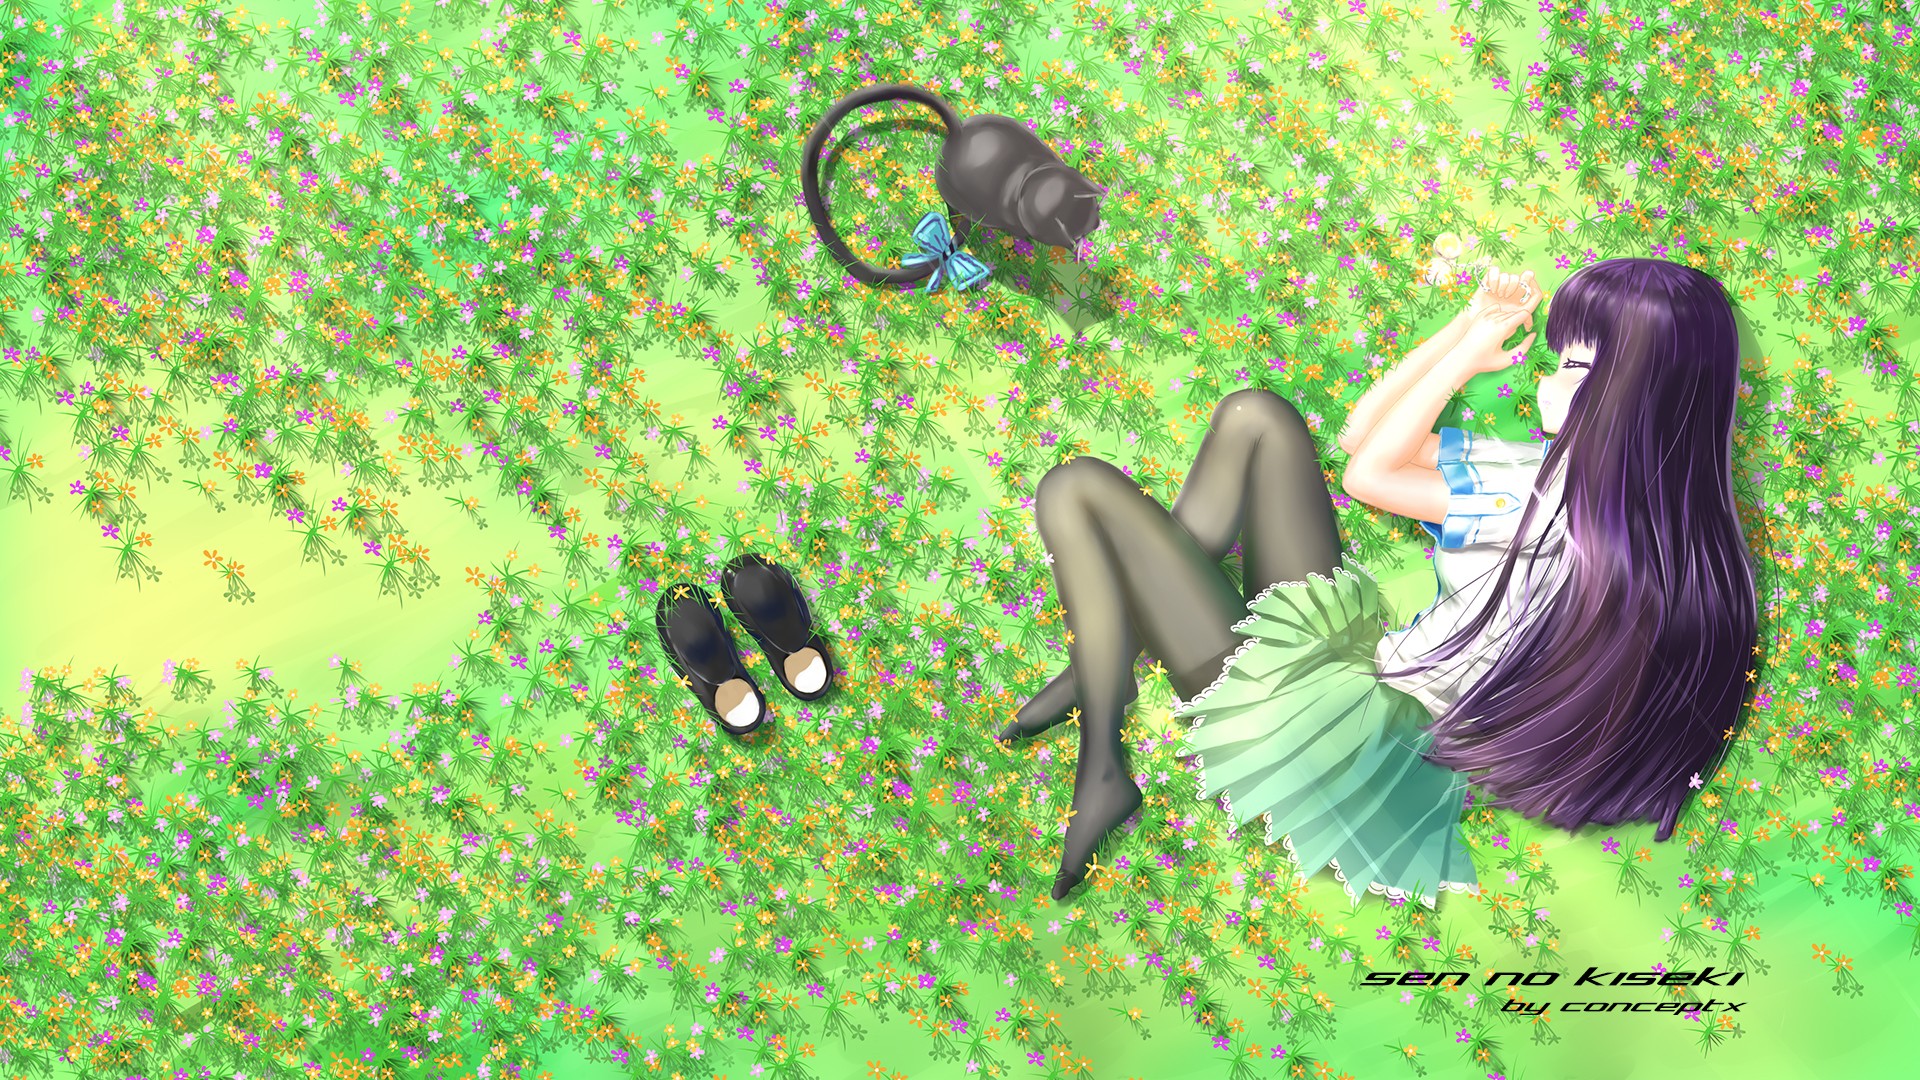 Anime 1920x1080 anime anime girls cats long hair skirt grass thighs legs lying down closed eyes green skirt flowers Pixiv